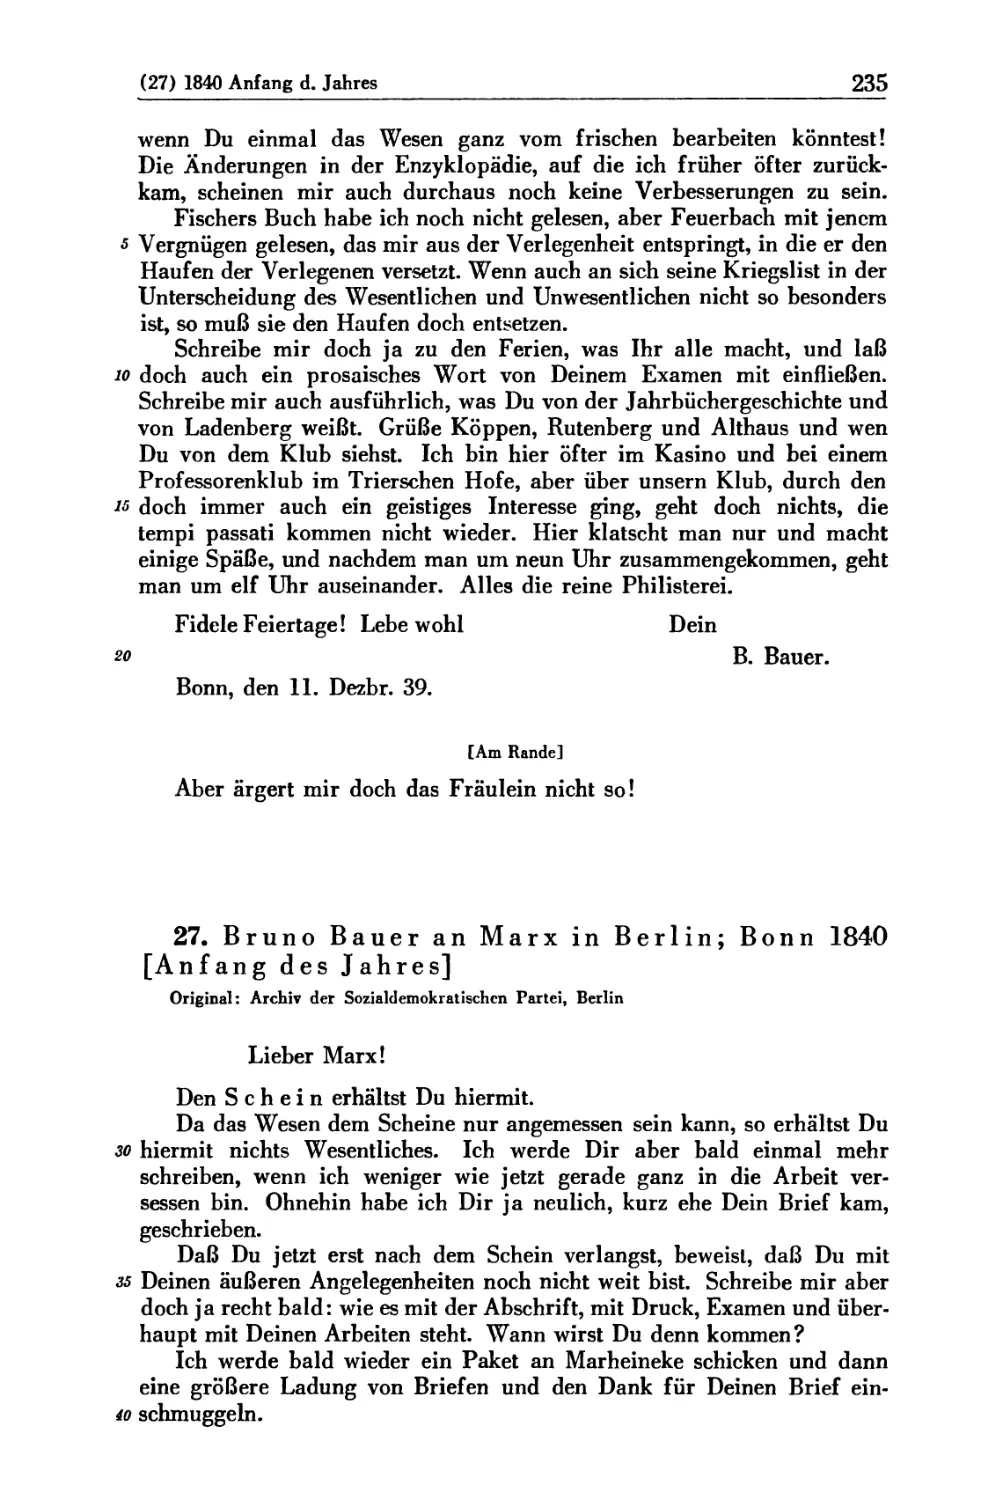 27. Bruno Bauer an Marx in Berlin; Bonn 1840 [Anfang des Jahres]